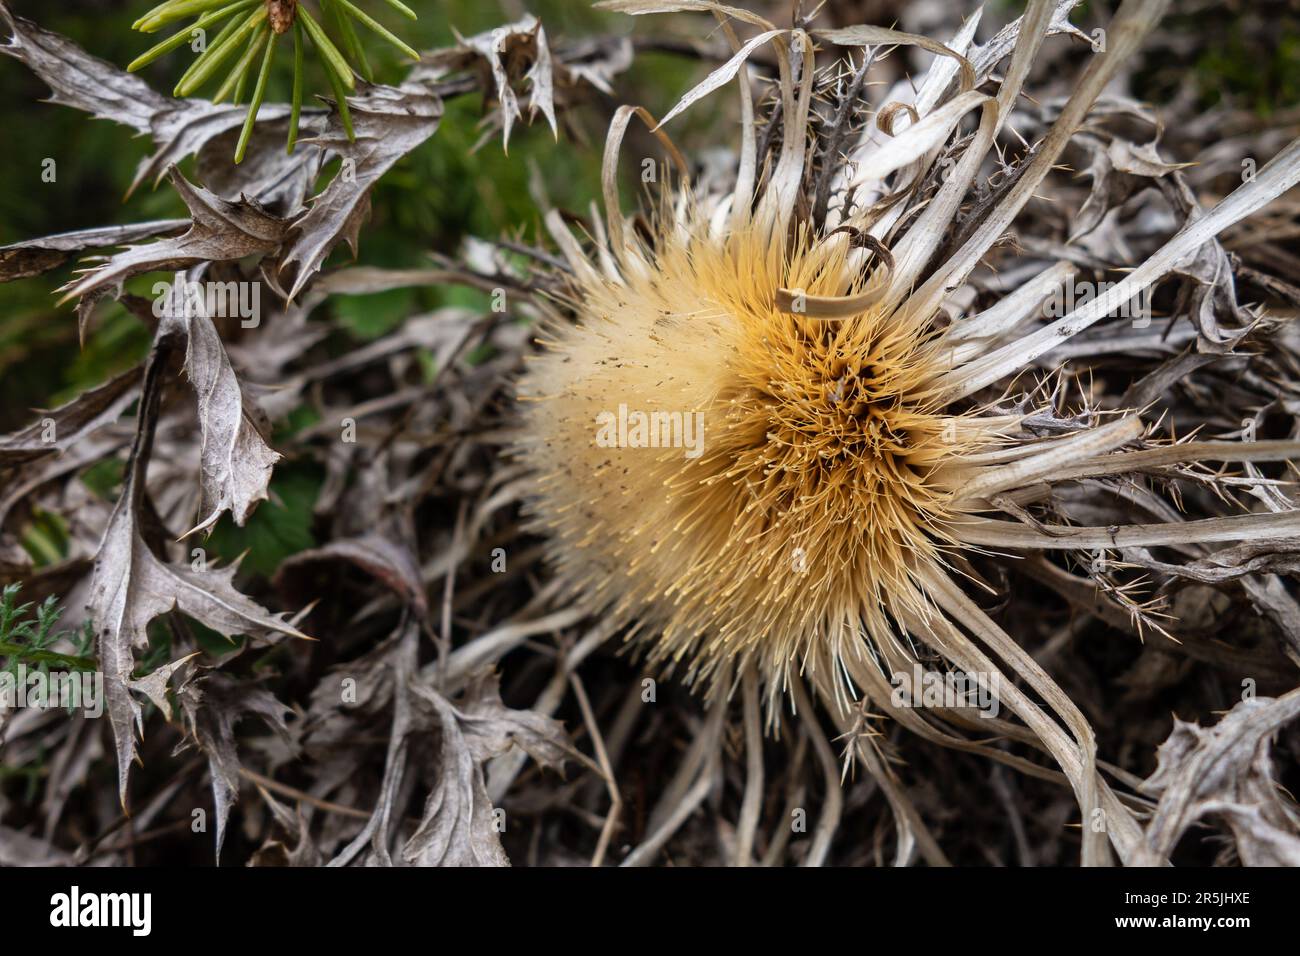 Carlina acanthifolia plant known as carline thistles in grass, similar to acaulis and vulgaris types Stock Photo